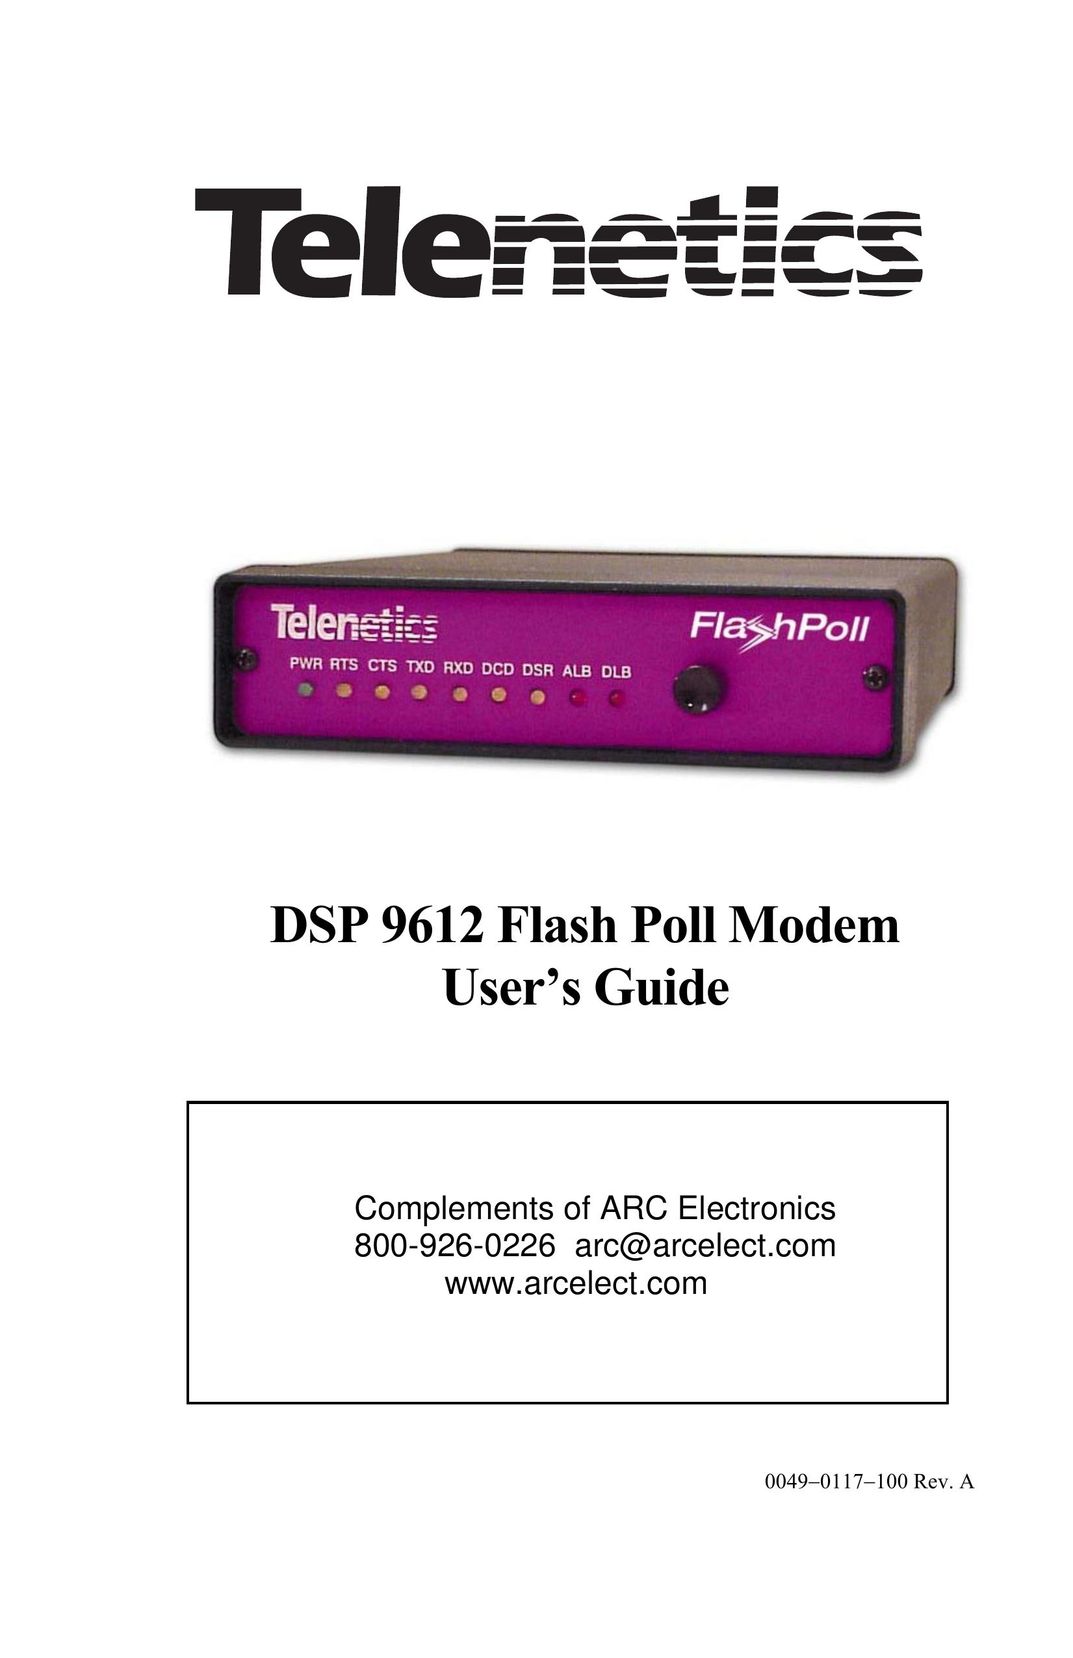 Telenetics DSP 9612 Network Card User Manual